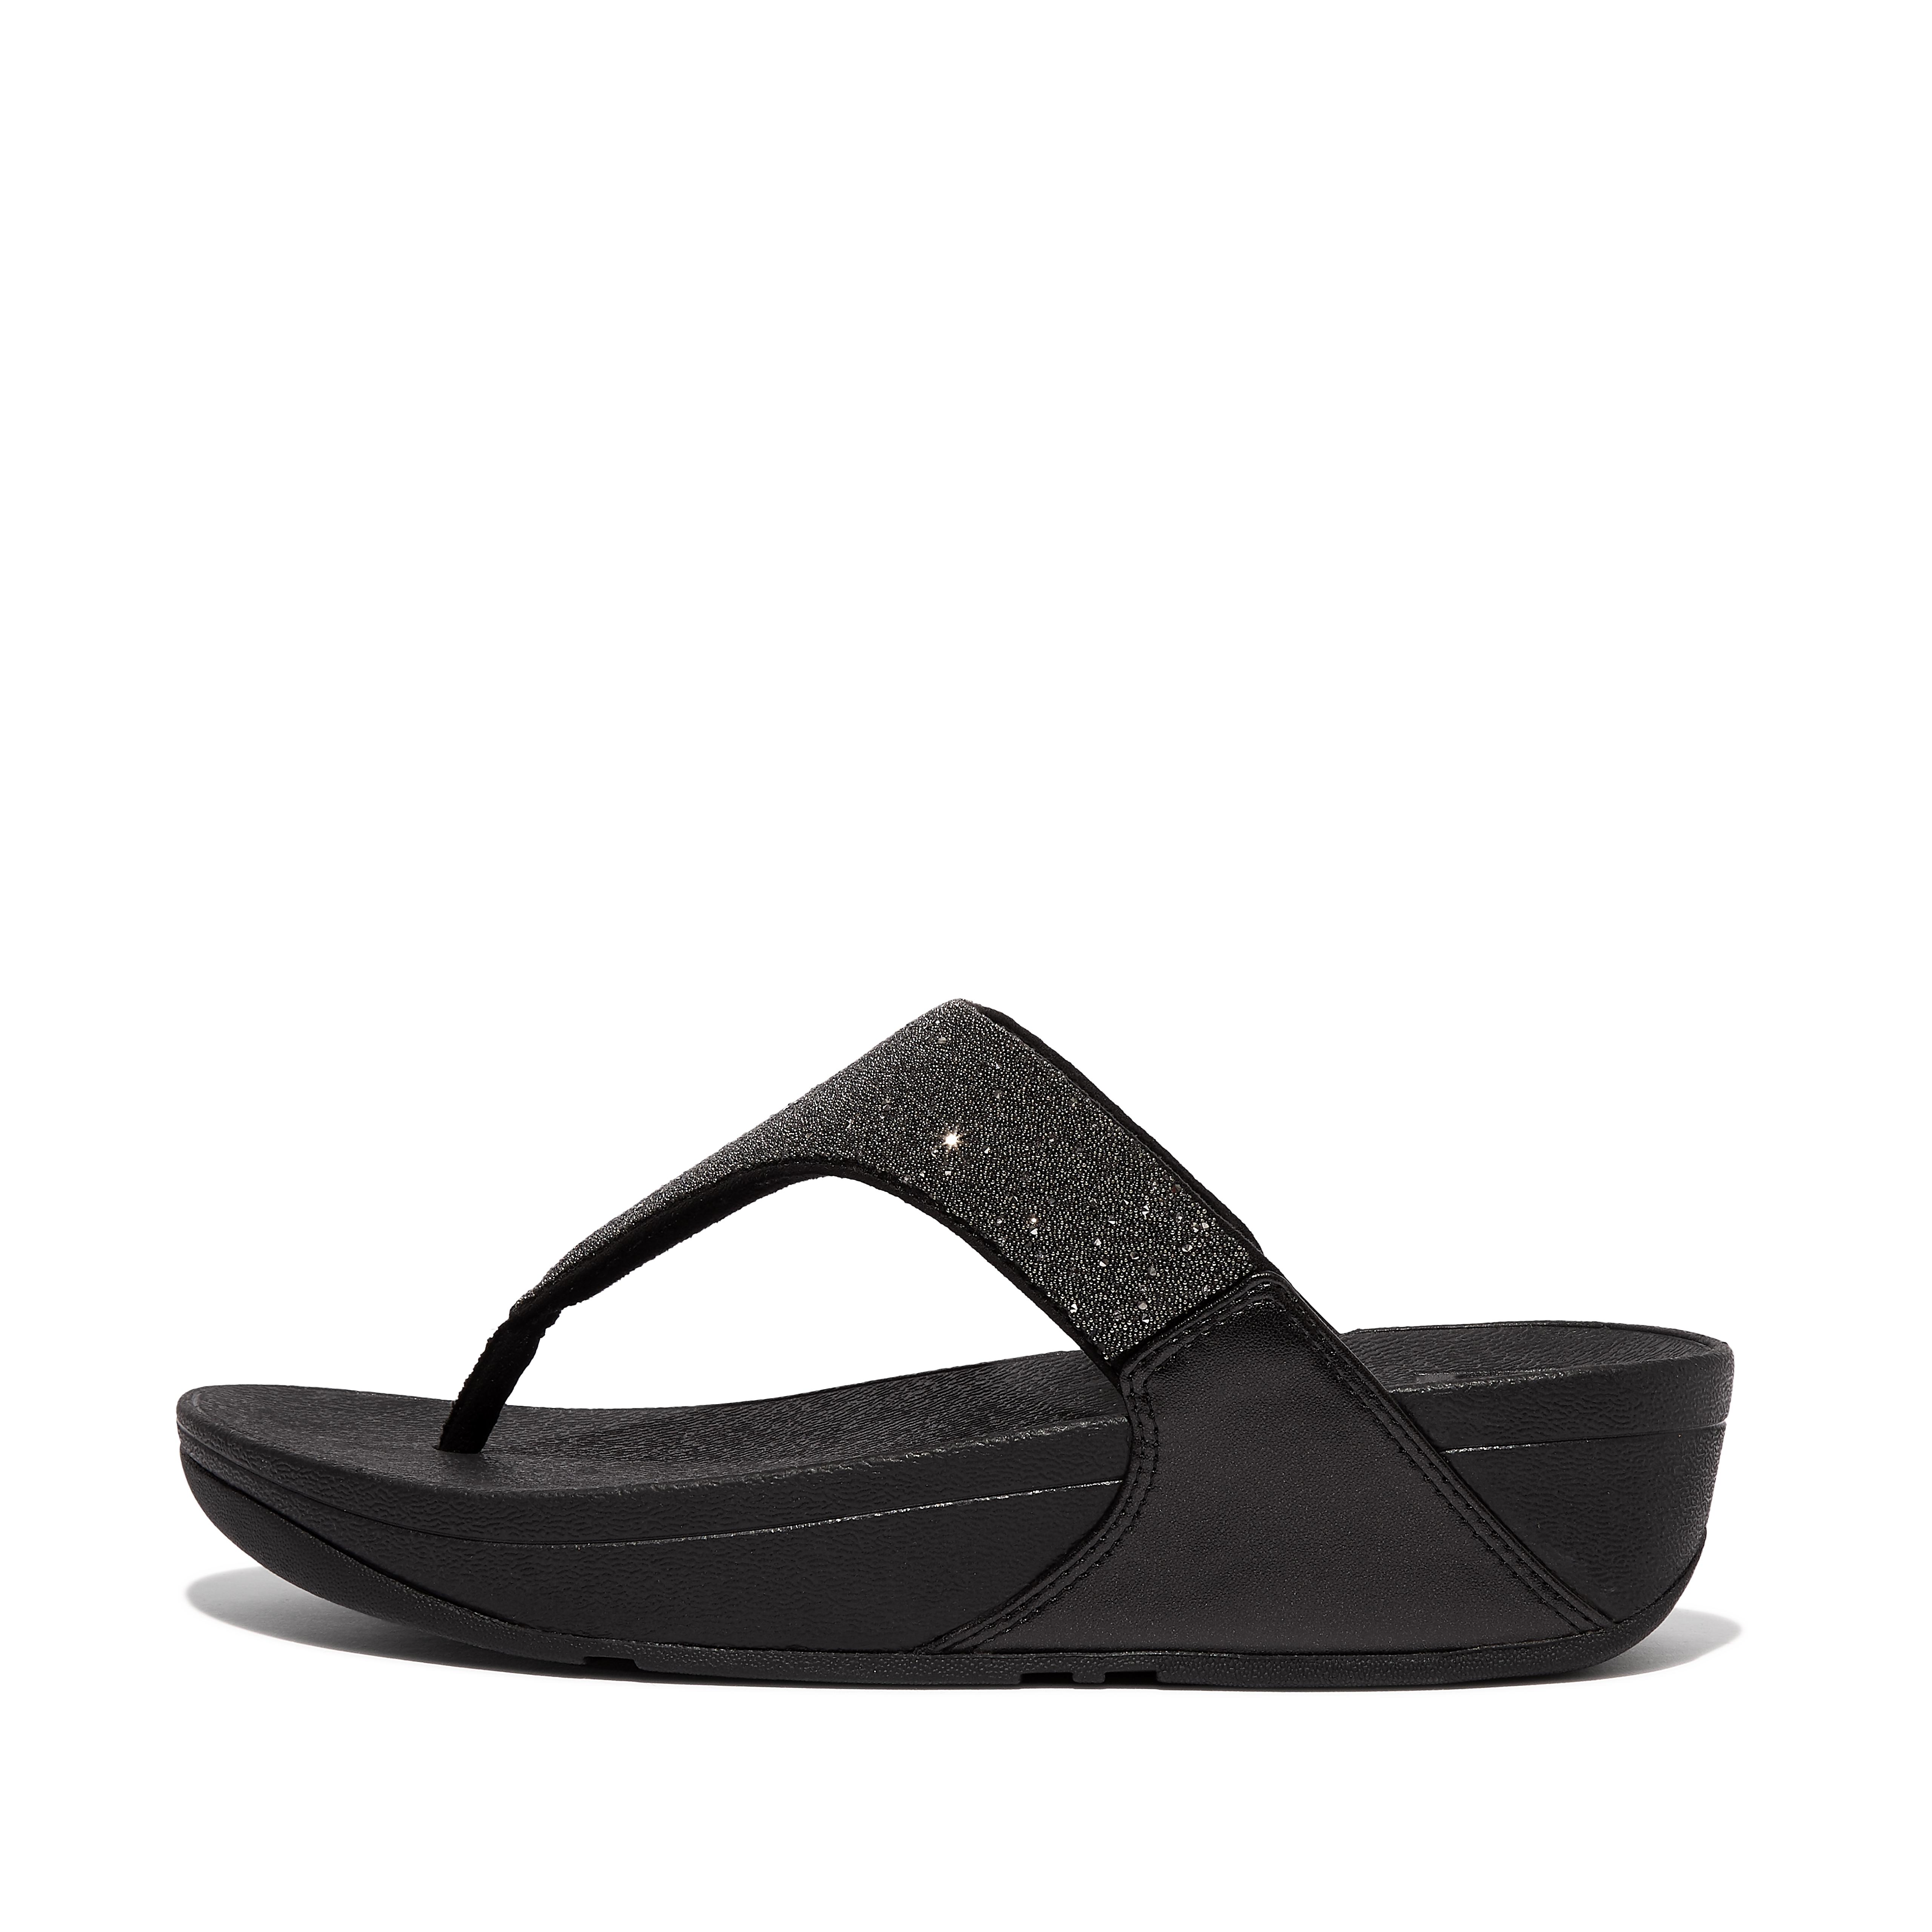 Fitflop Opul Toe-Post Sandals,All Black